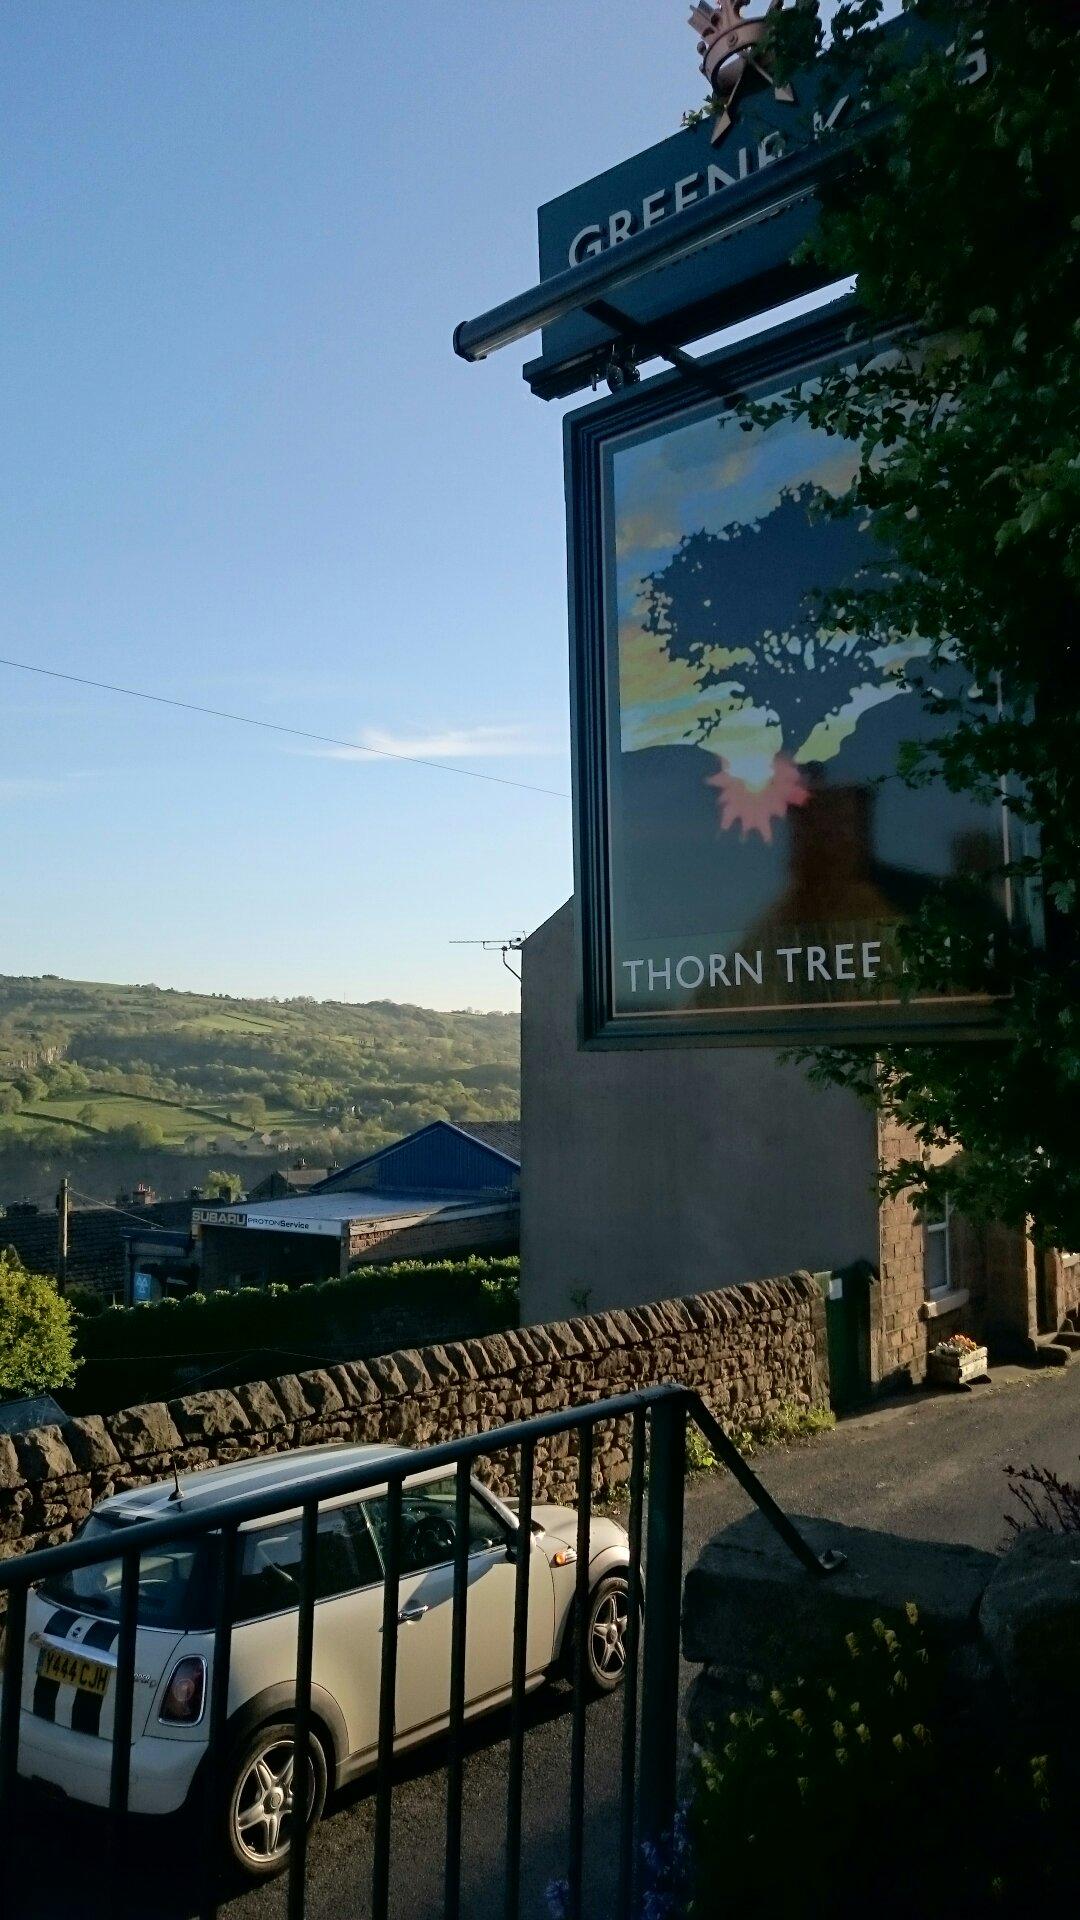 The Thorn Tree Inn